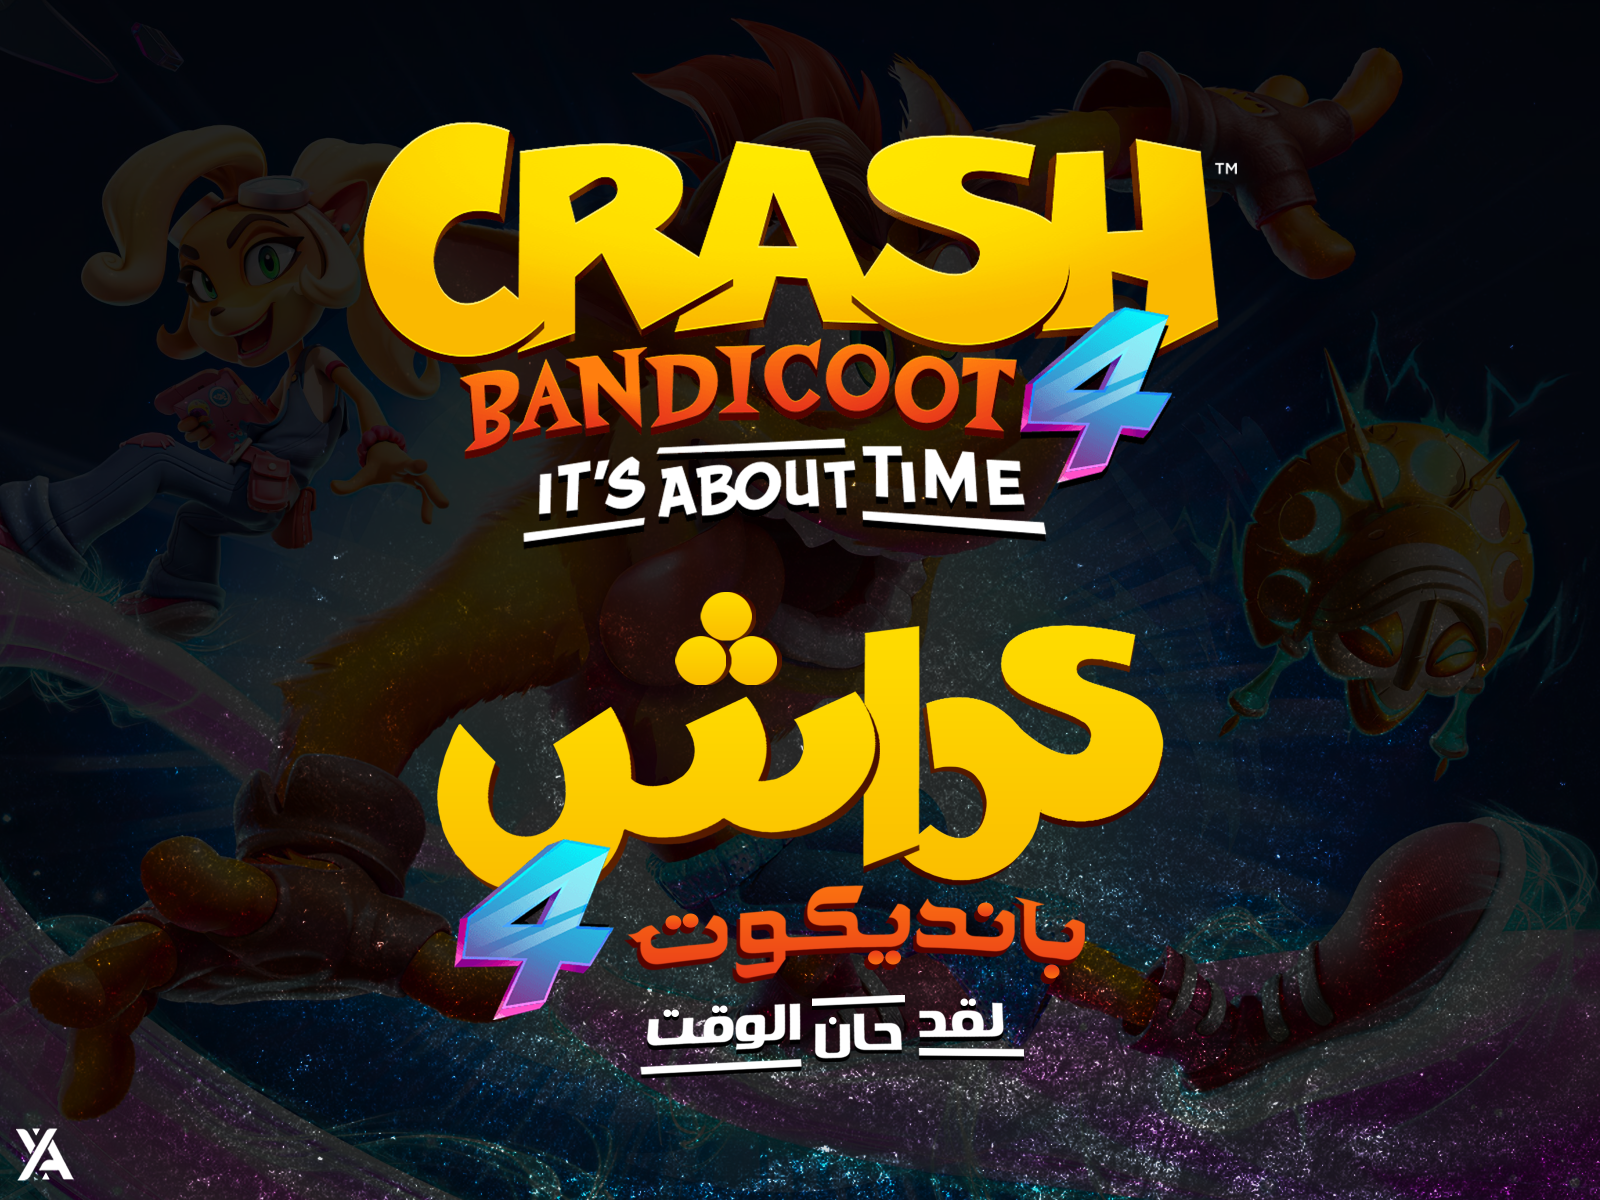 crash bandicoot logo png